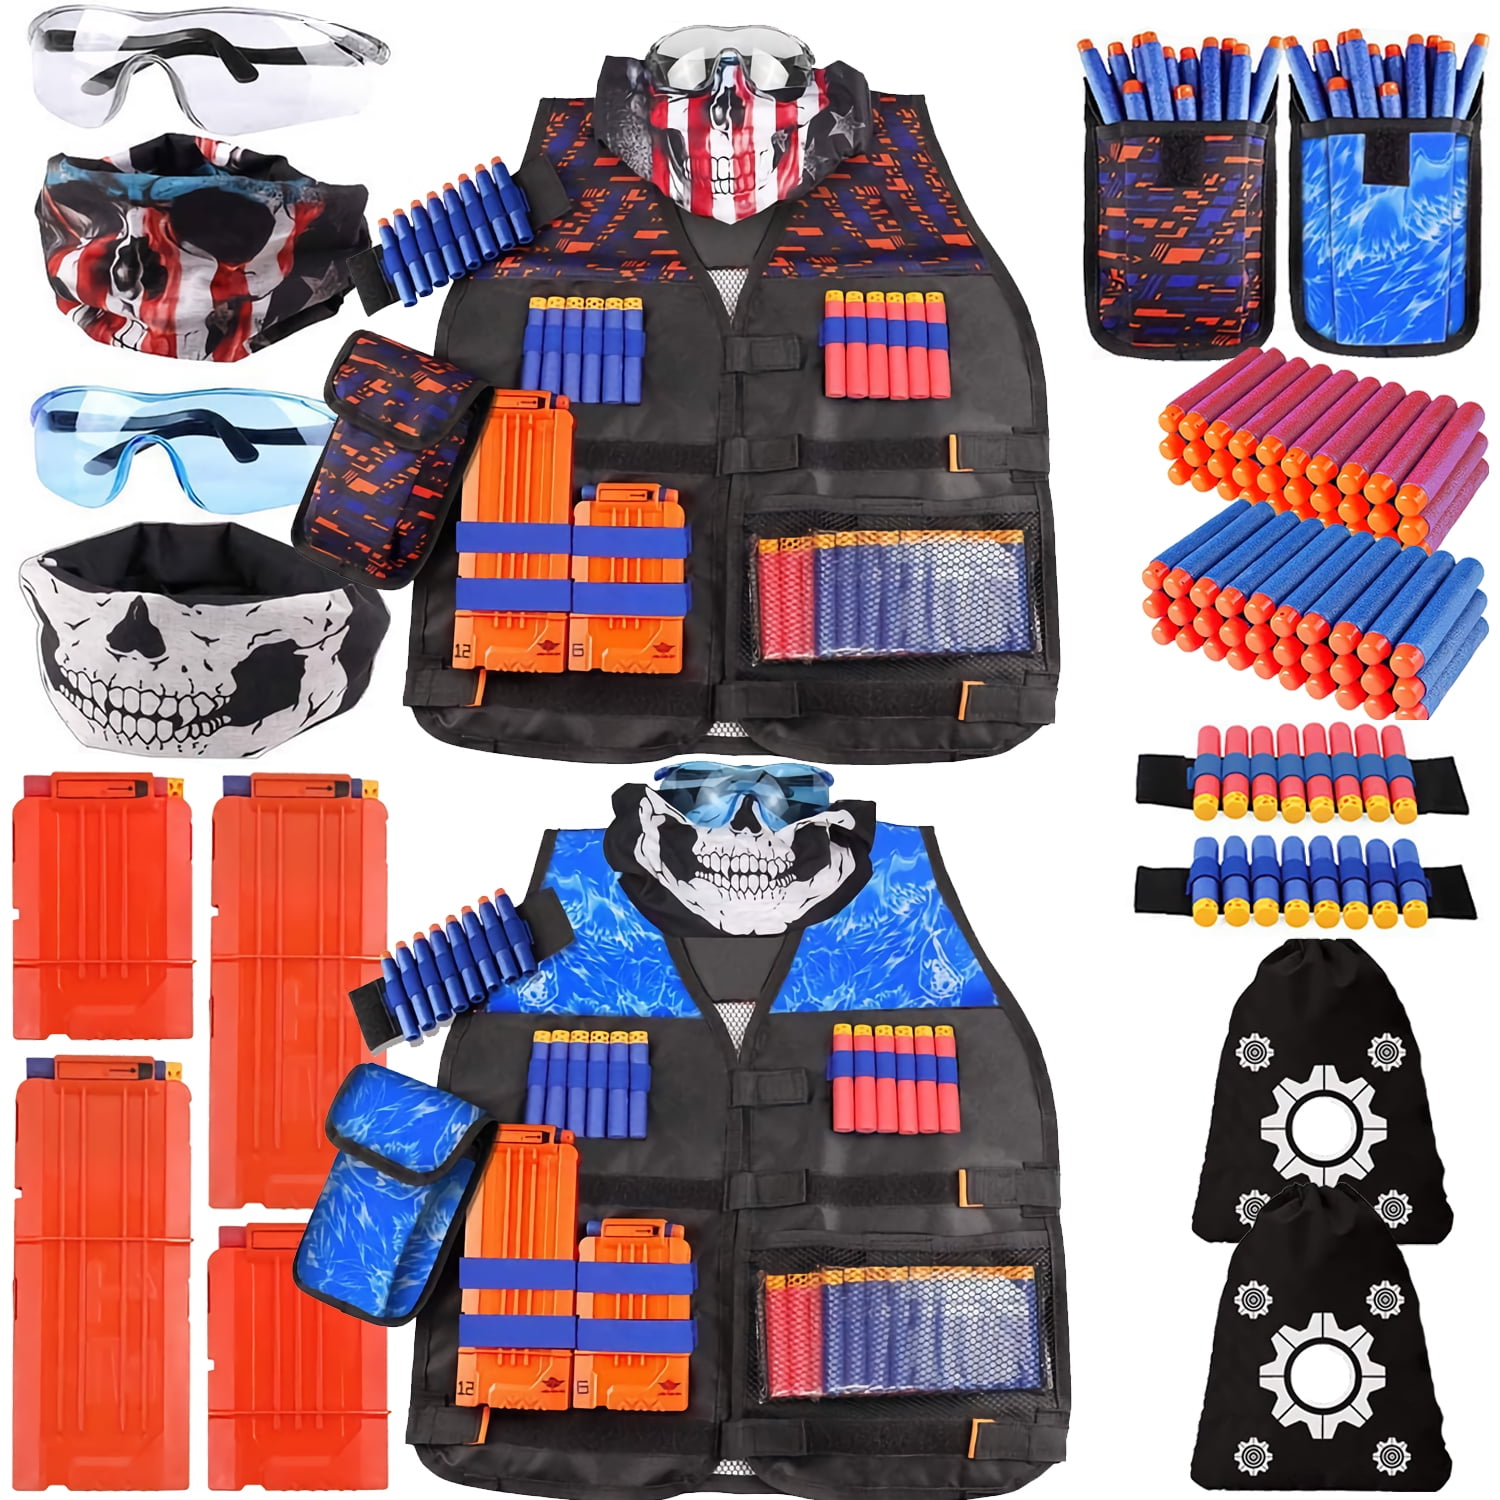 Kids Funny Azteca Vest Knitting Kit (6280-24)